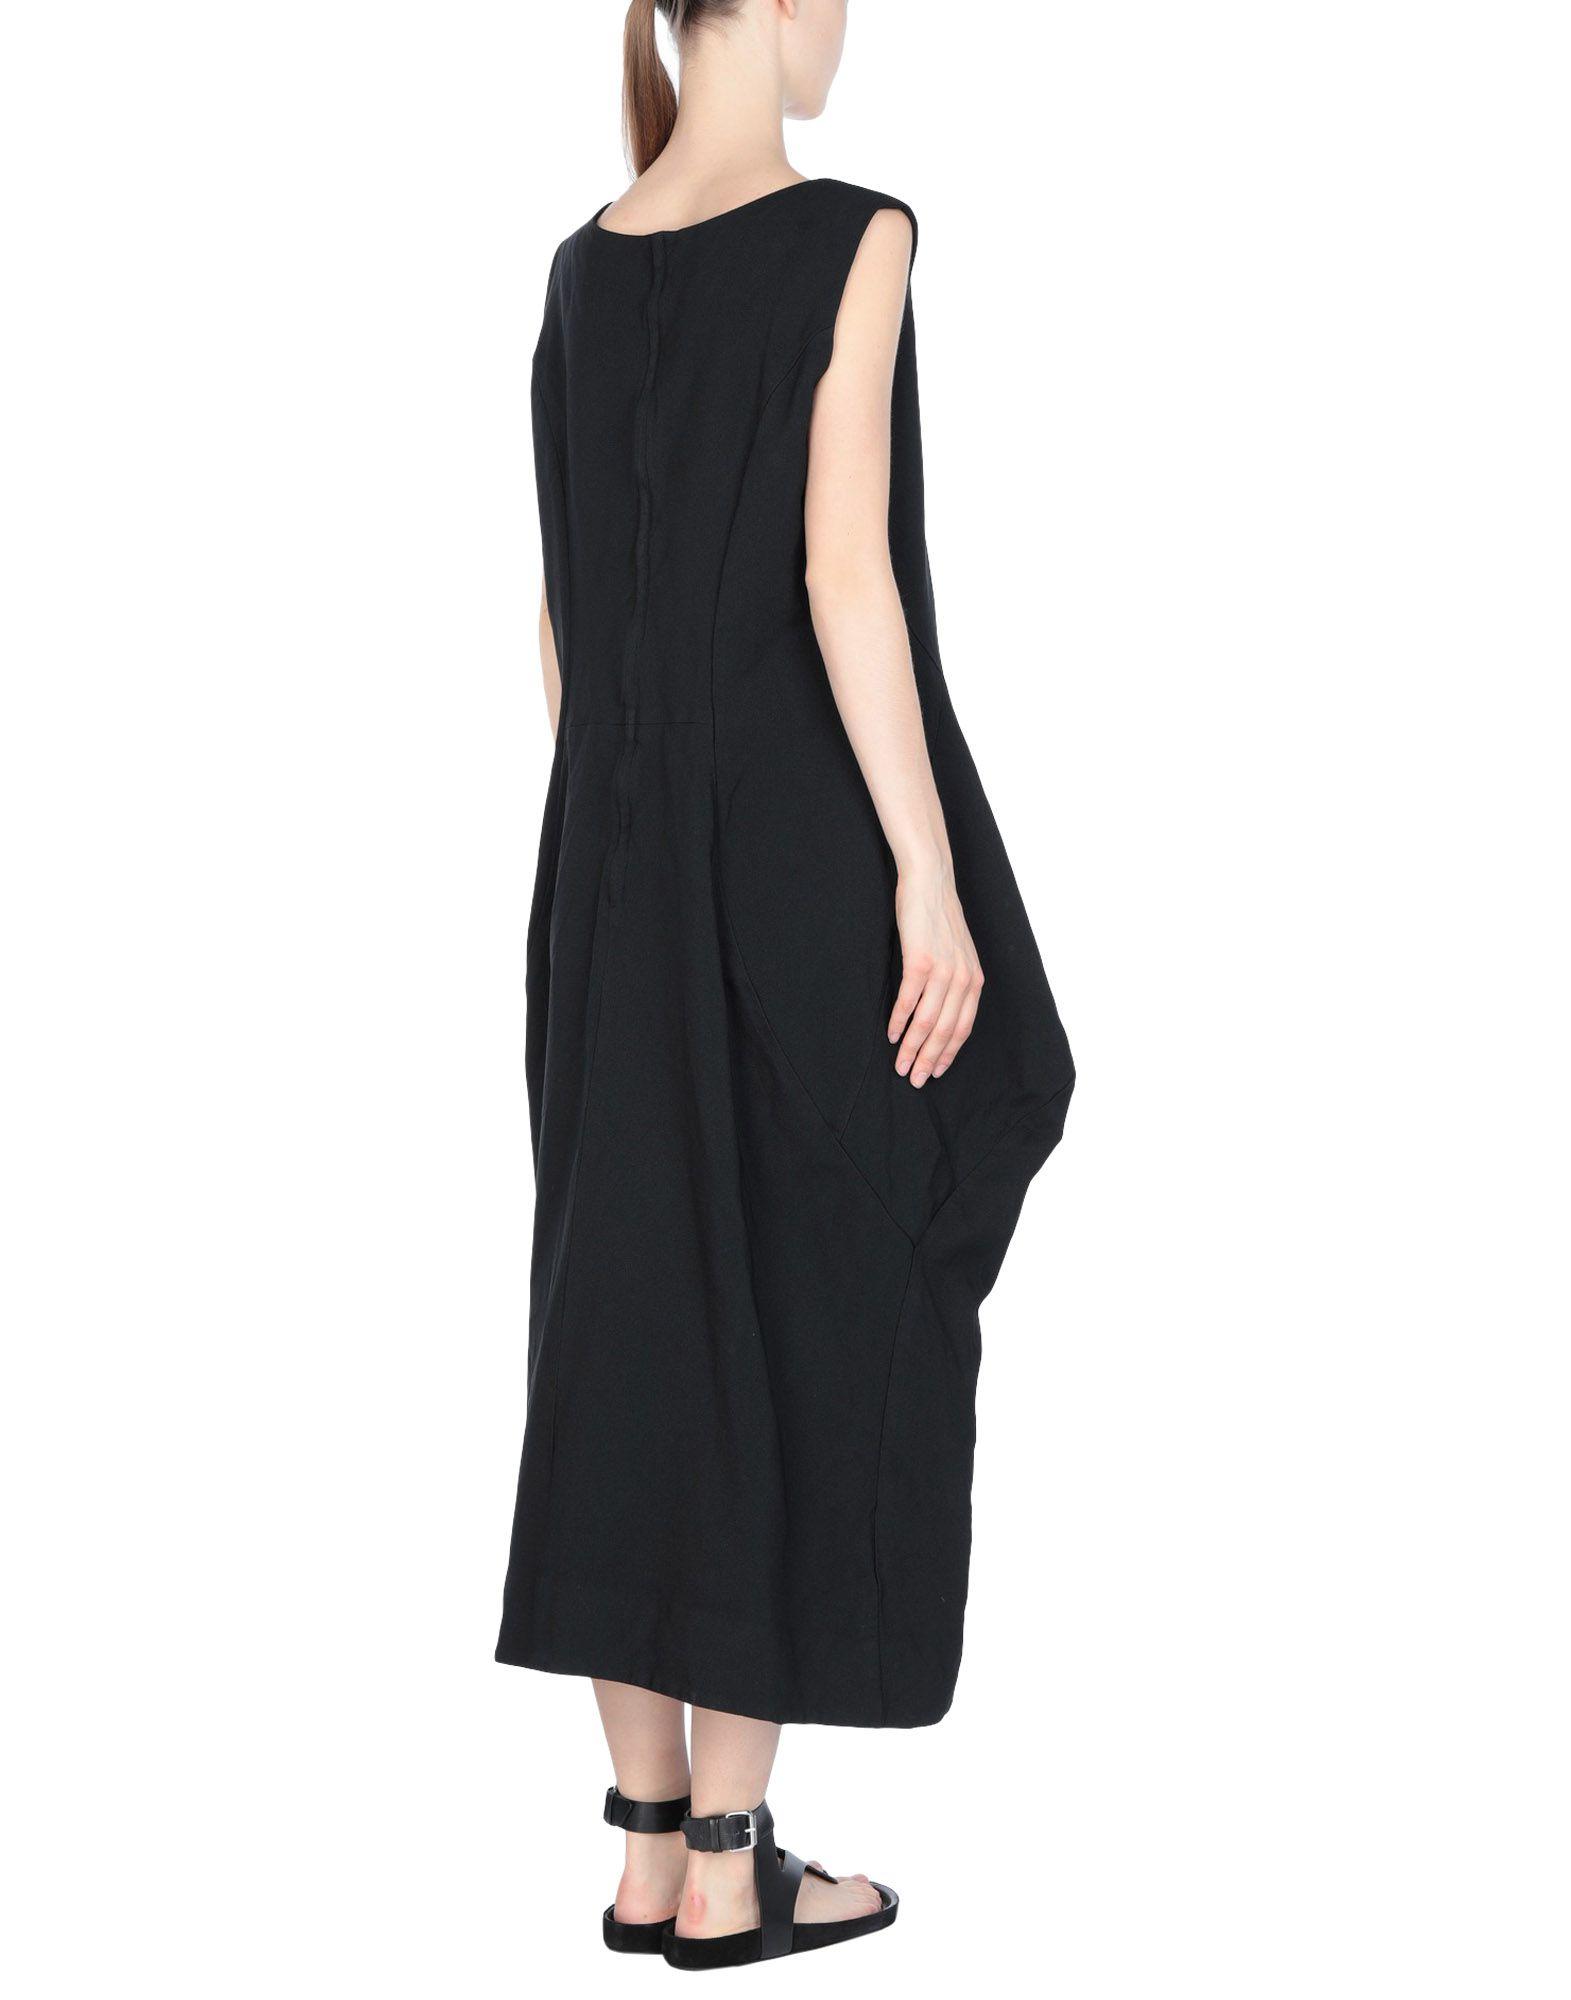 Comme des Garçons 3/4 Length Dress in Black - Lyst